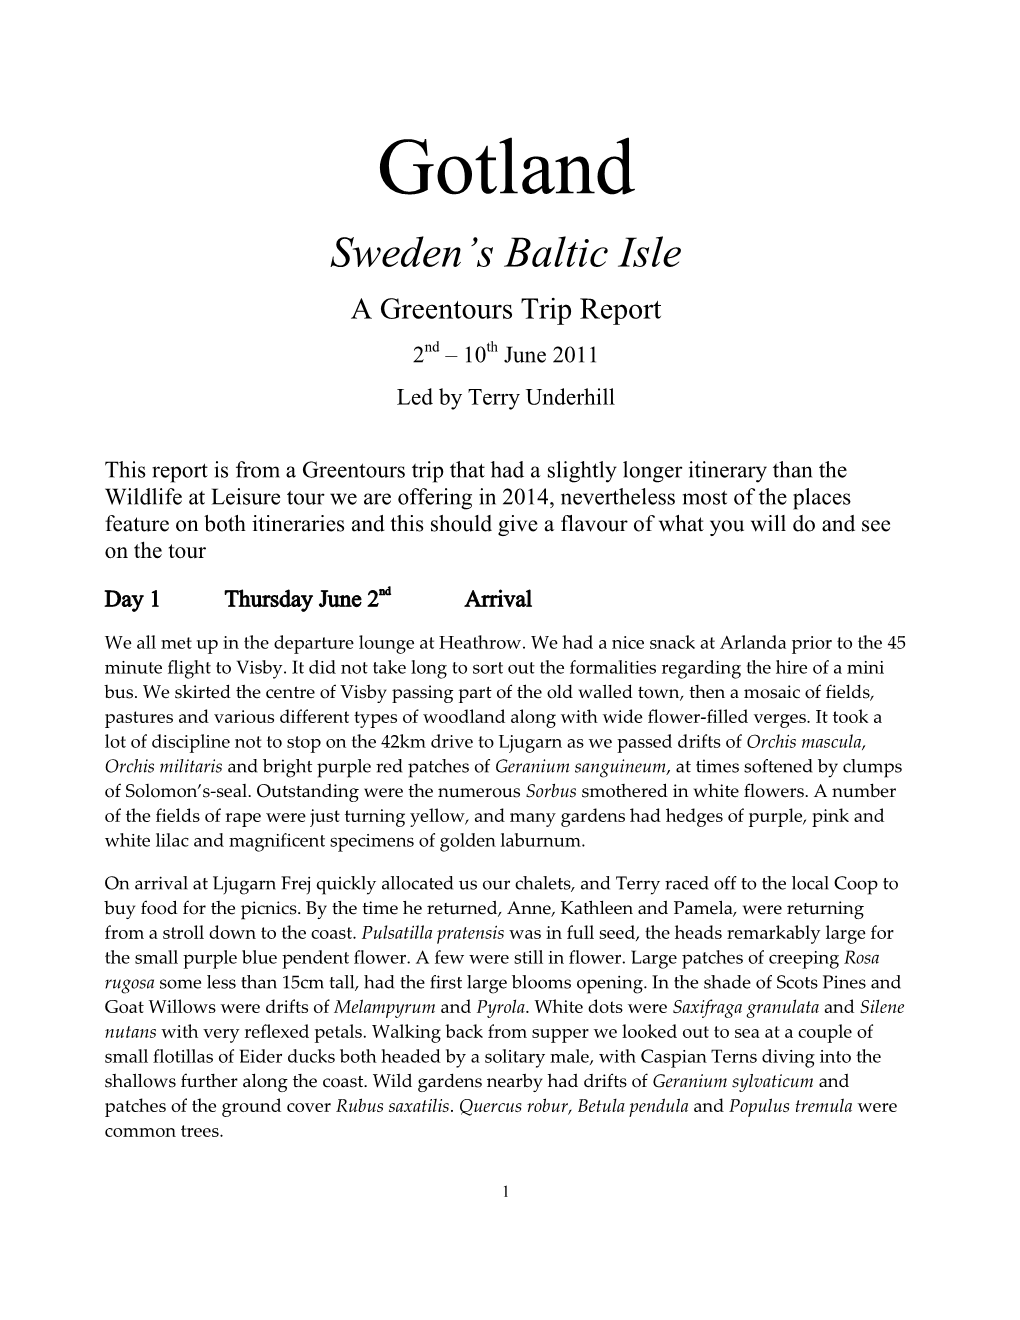 Gotland Trip Report 2004